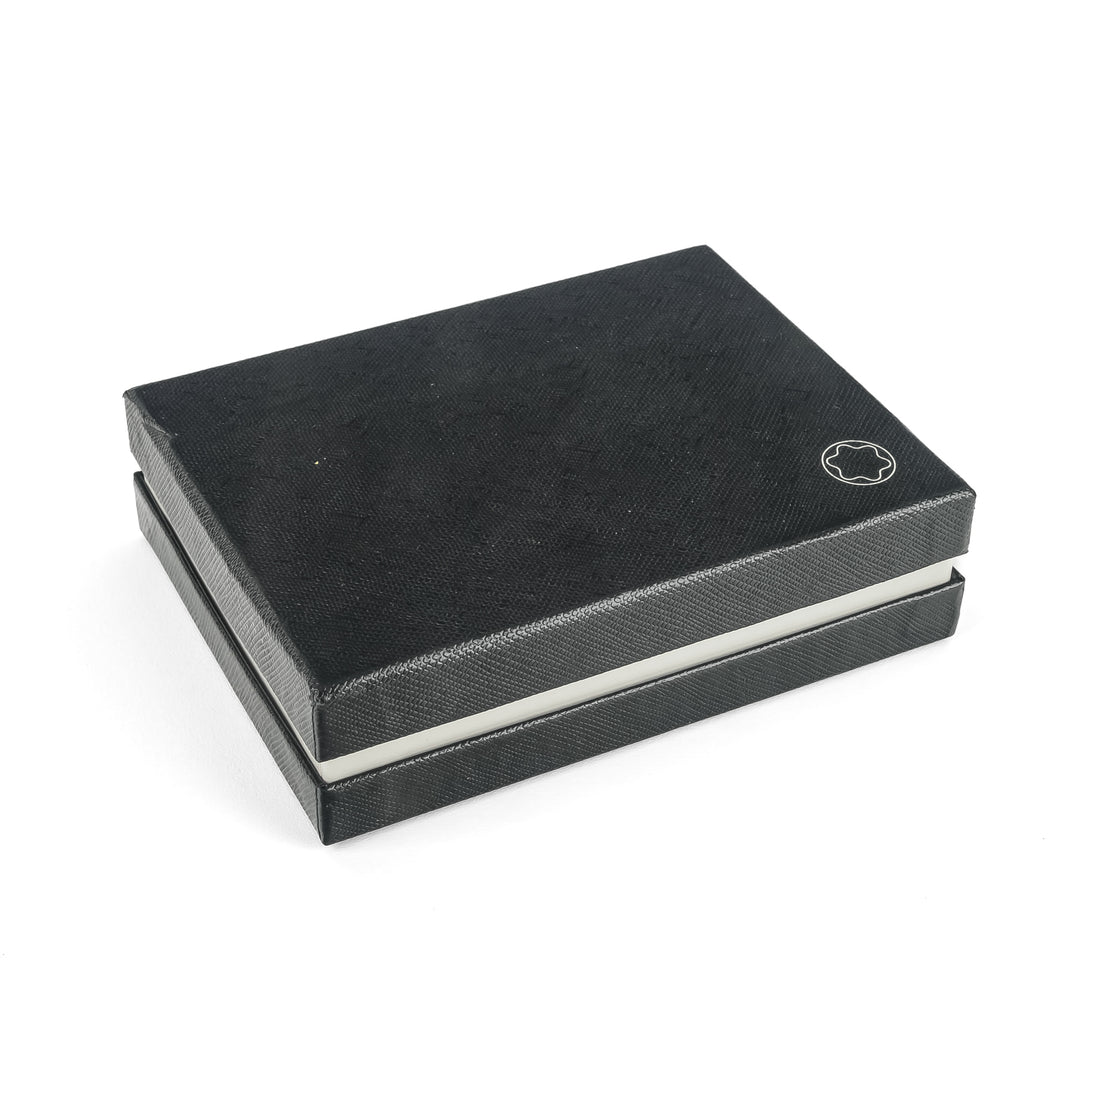 MONTBLANC Bifold Card Wallet - Black Textured Leather